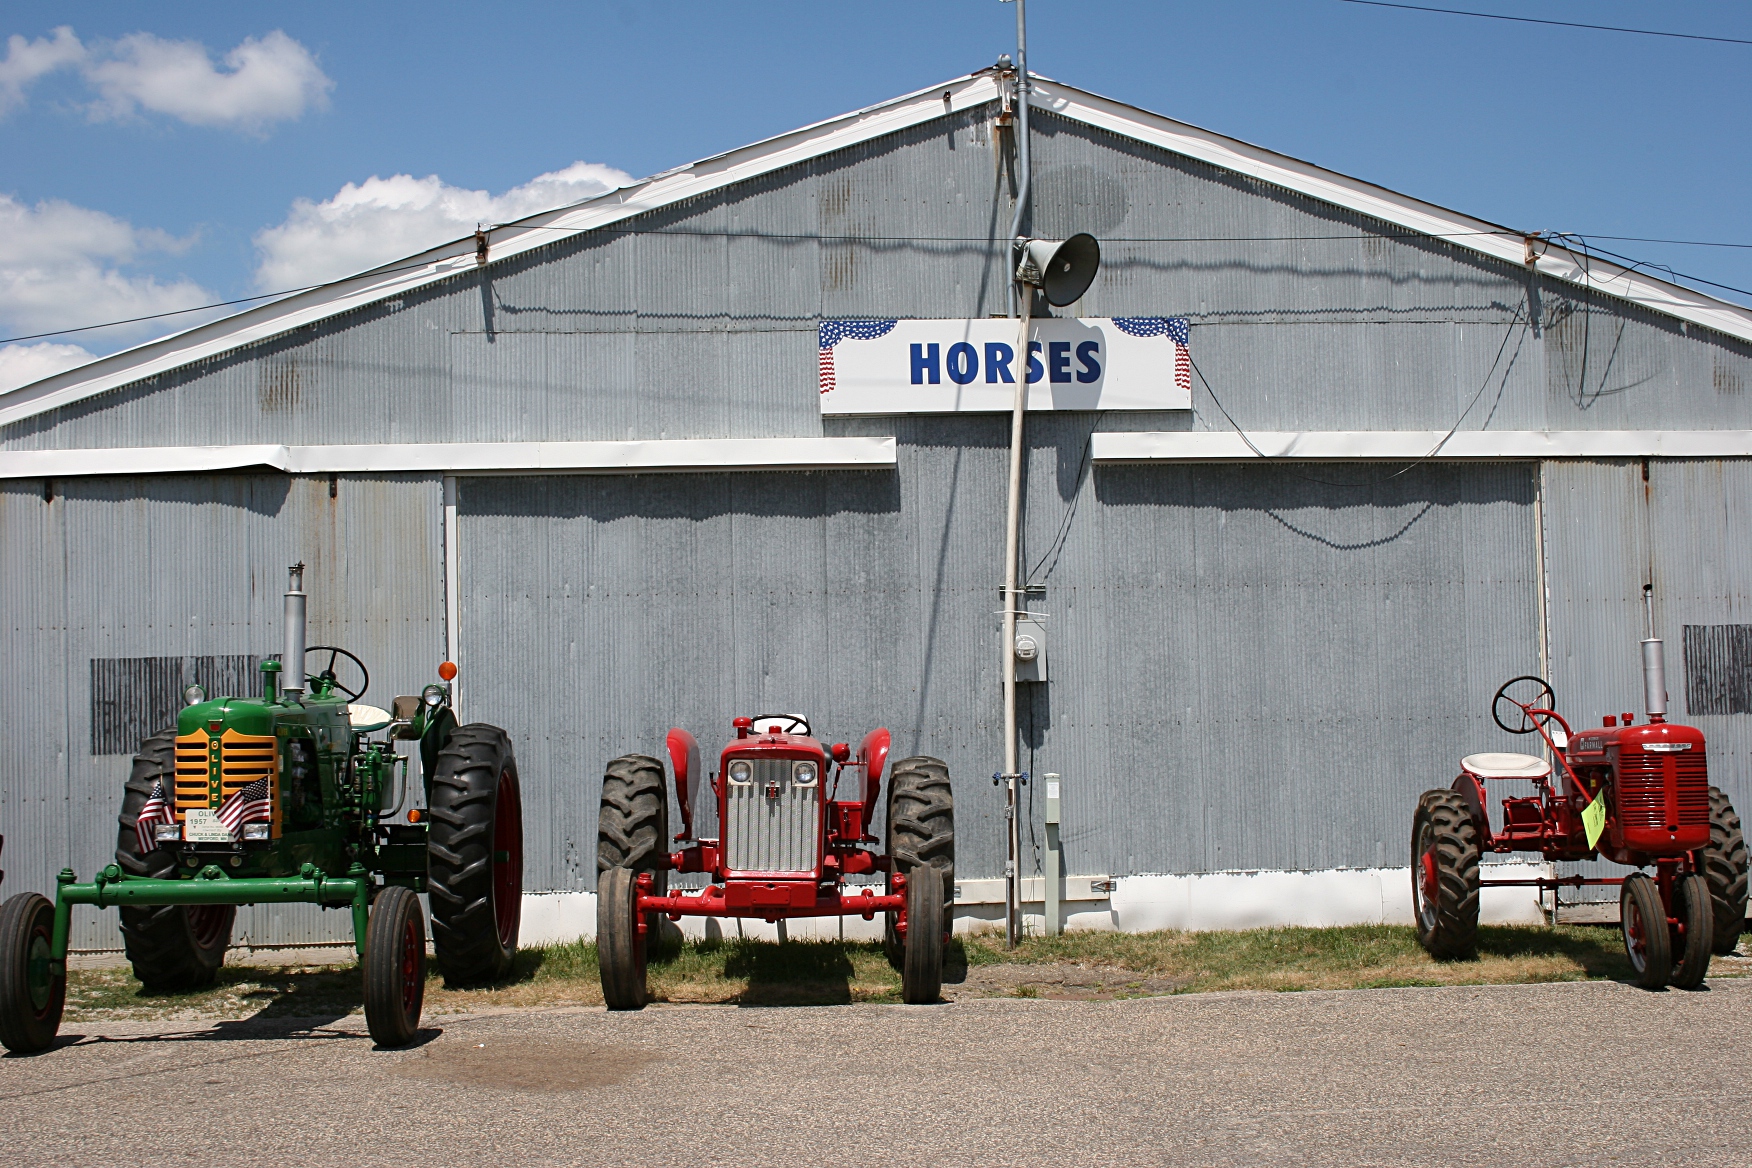 stories-tractors-at-horse-barn.jpg